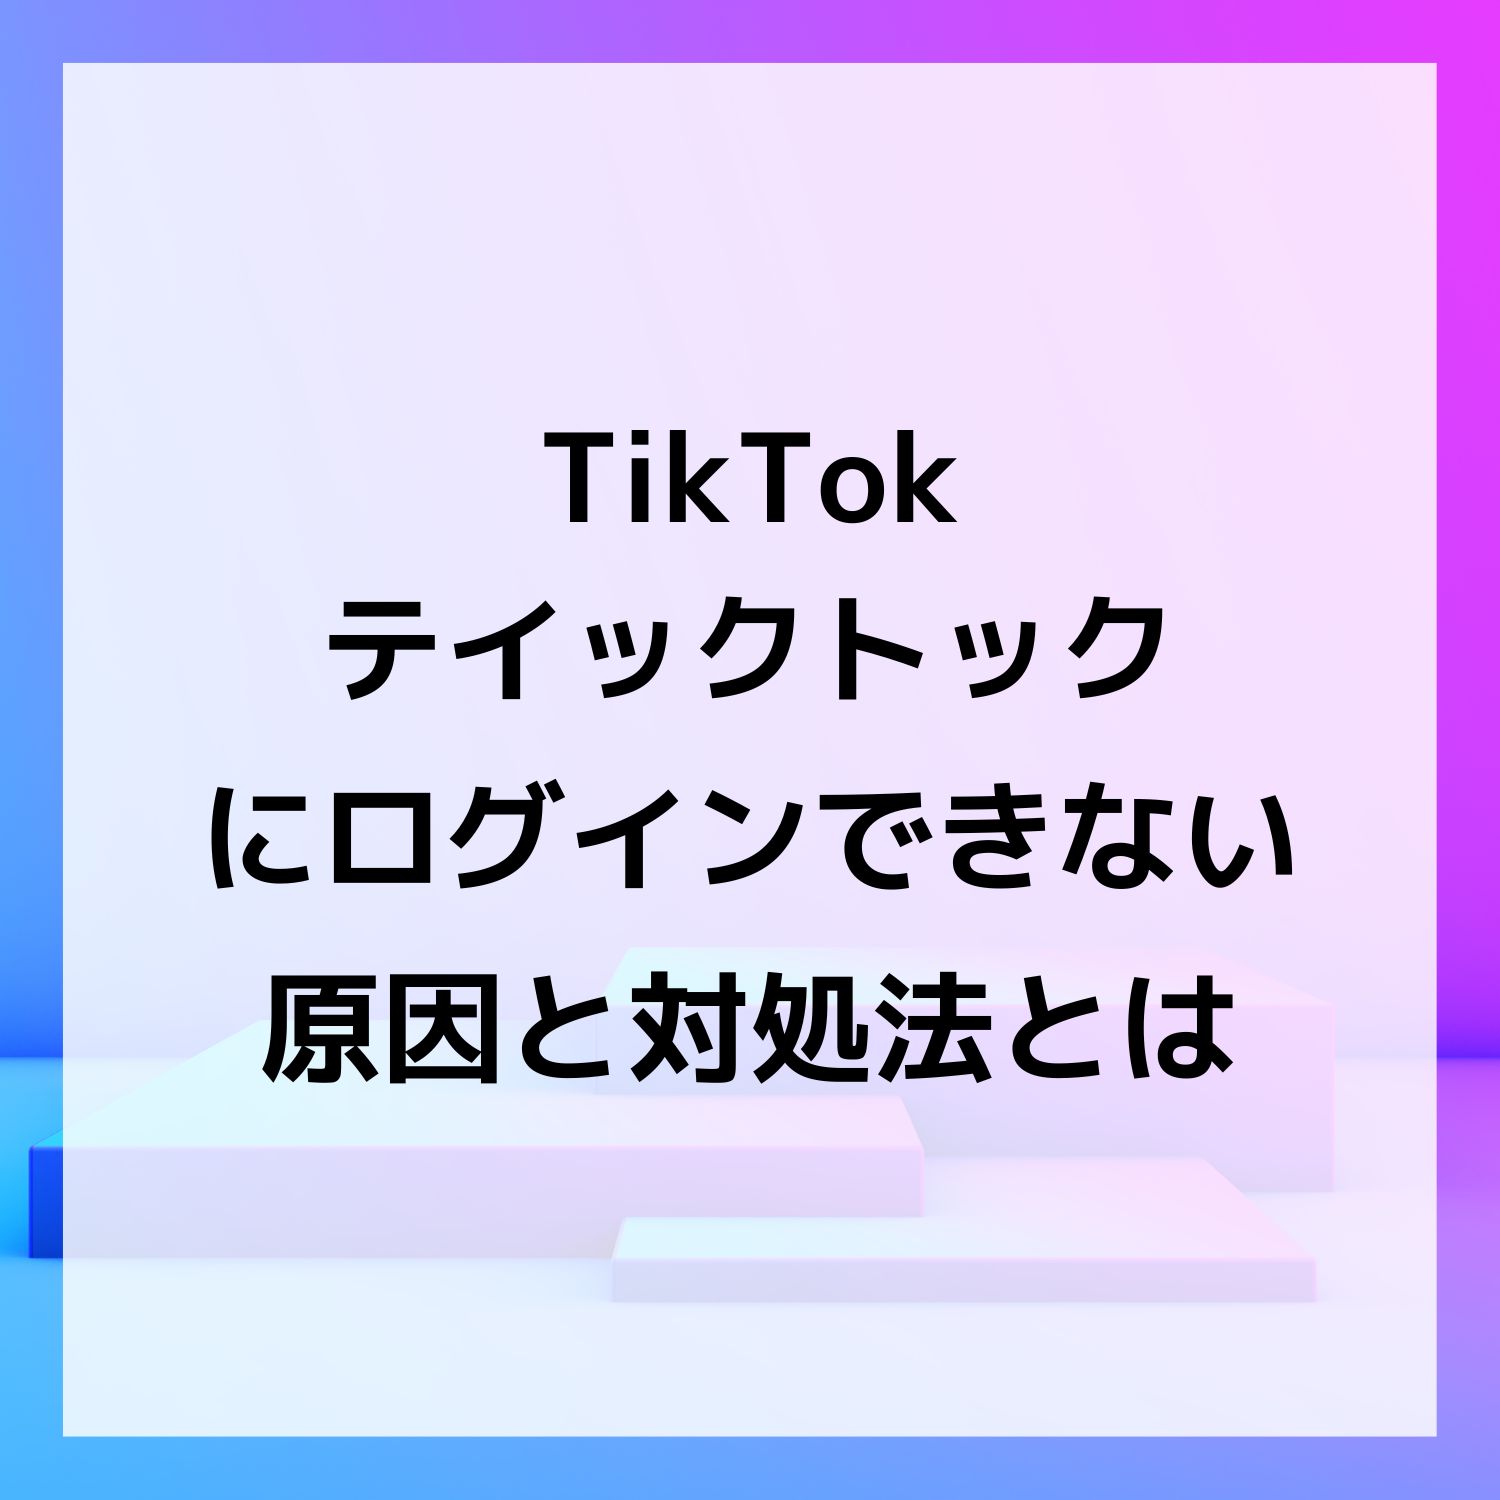 TikTok ティックトックにログインできない原因と対処法とは